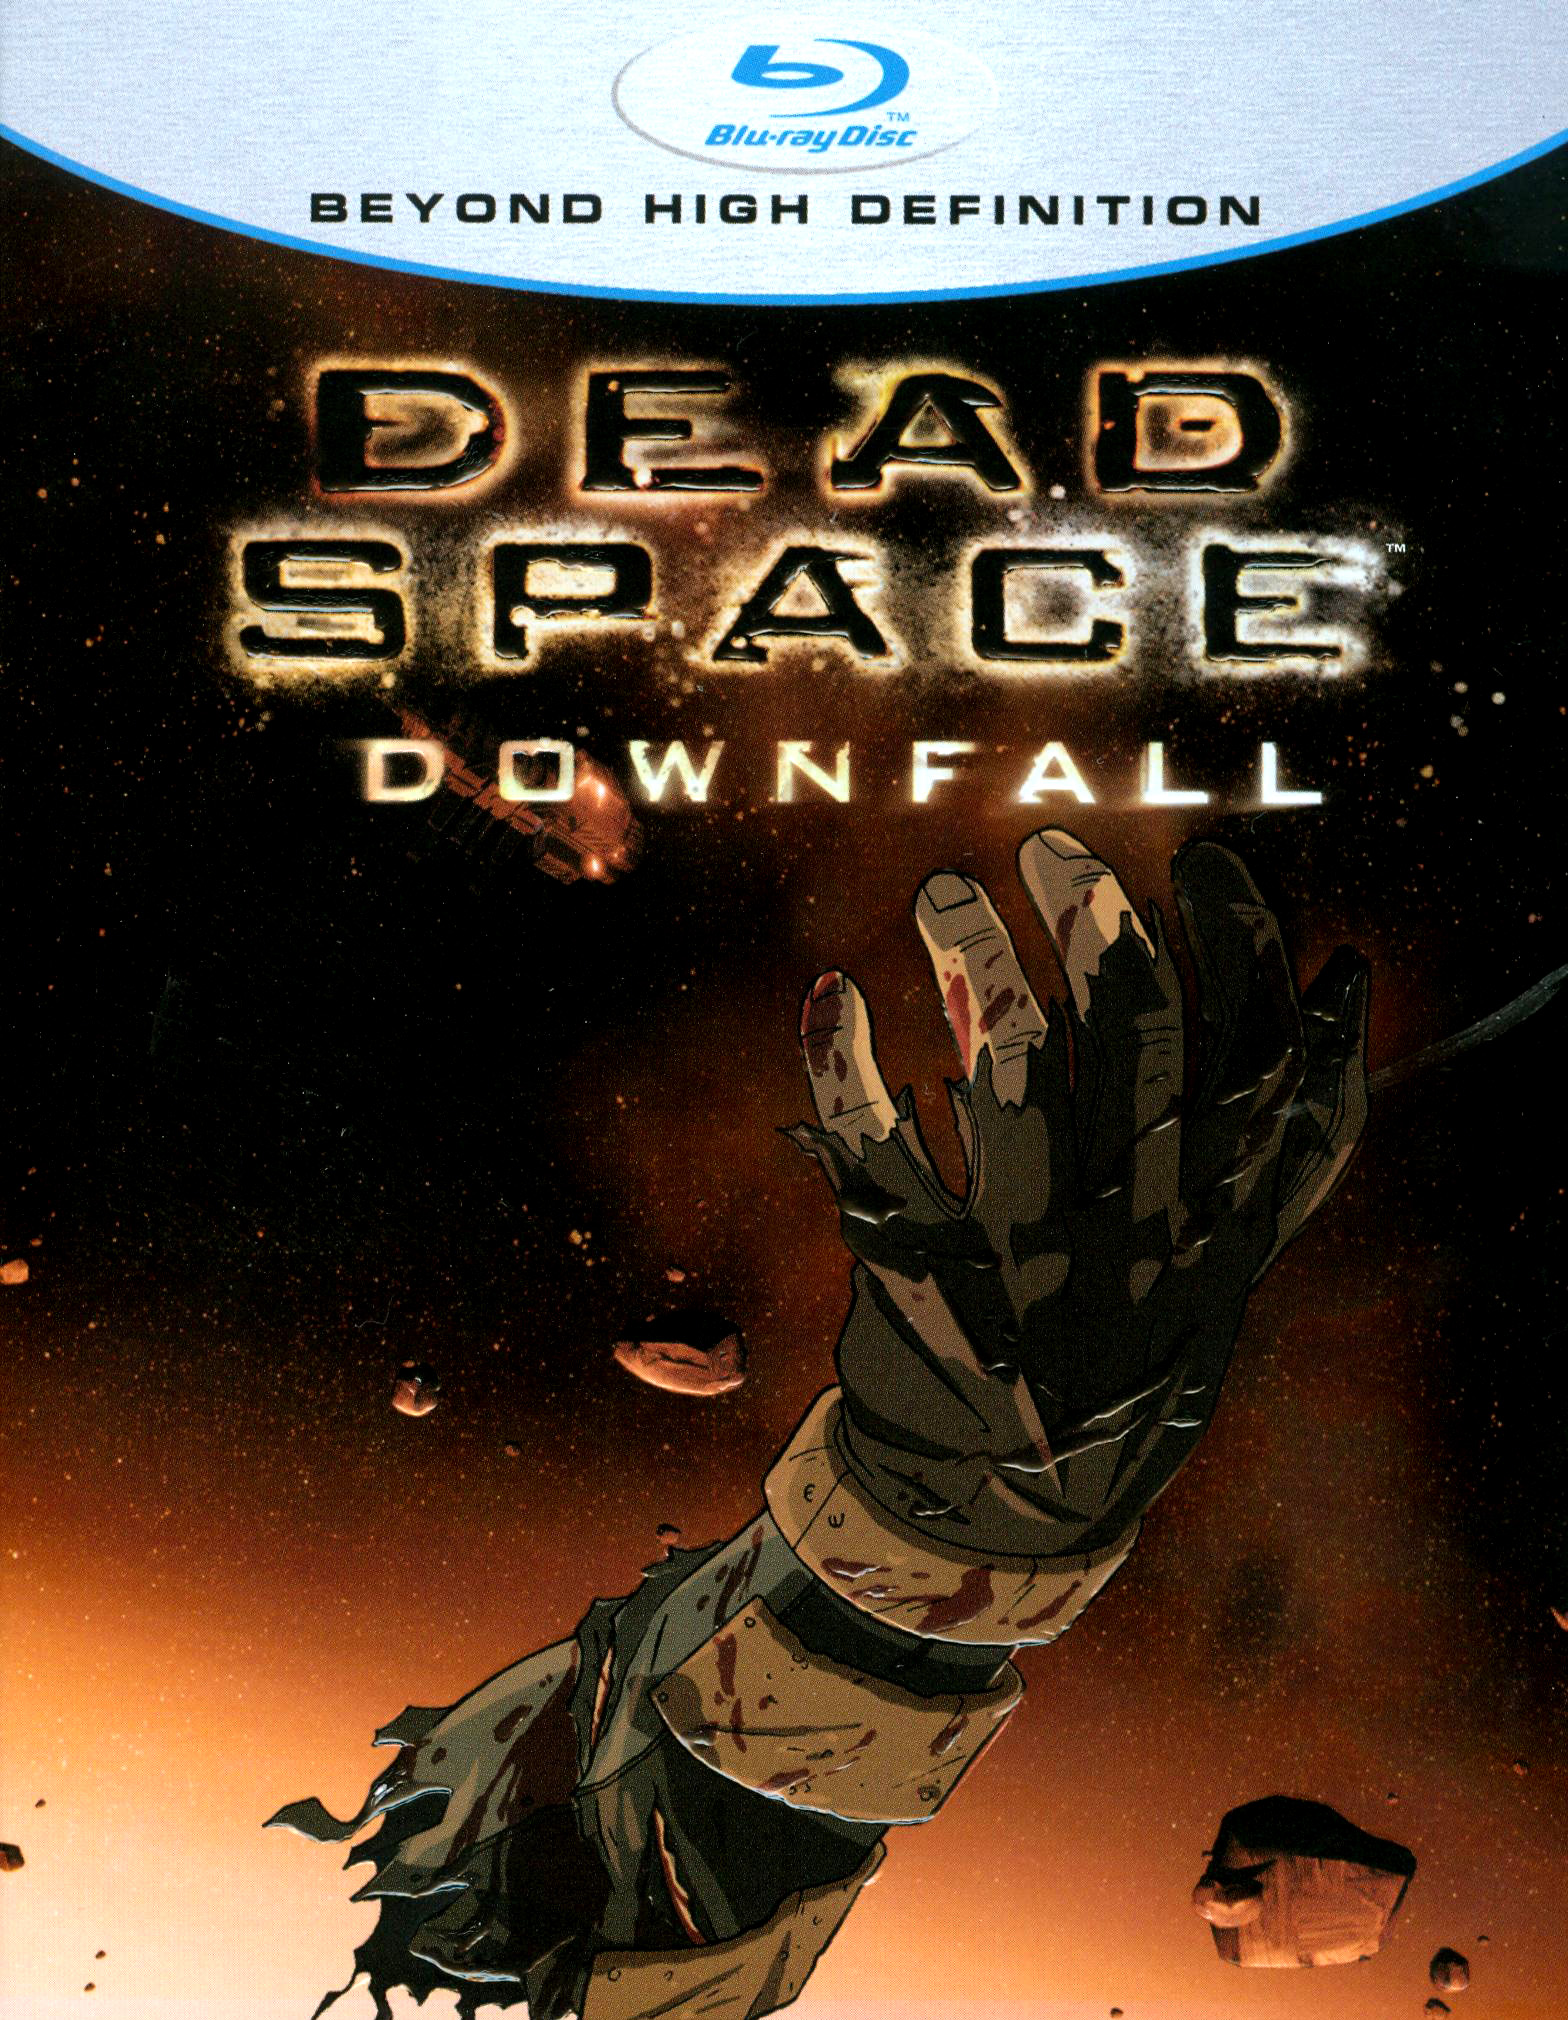 Buy Dead Space (2008)